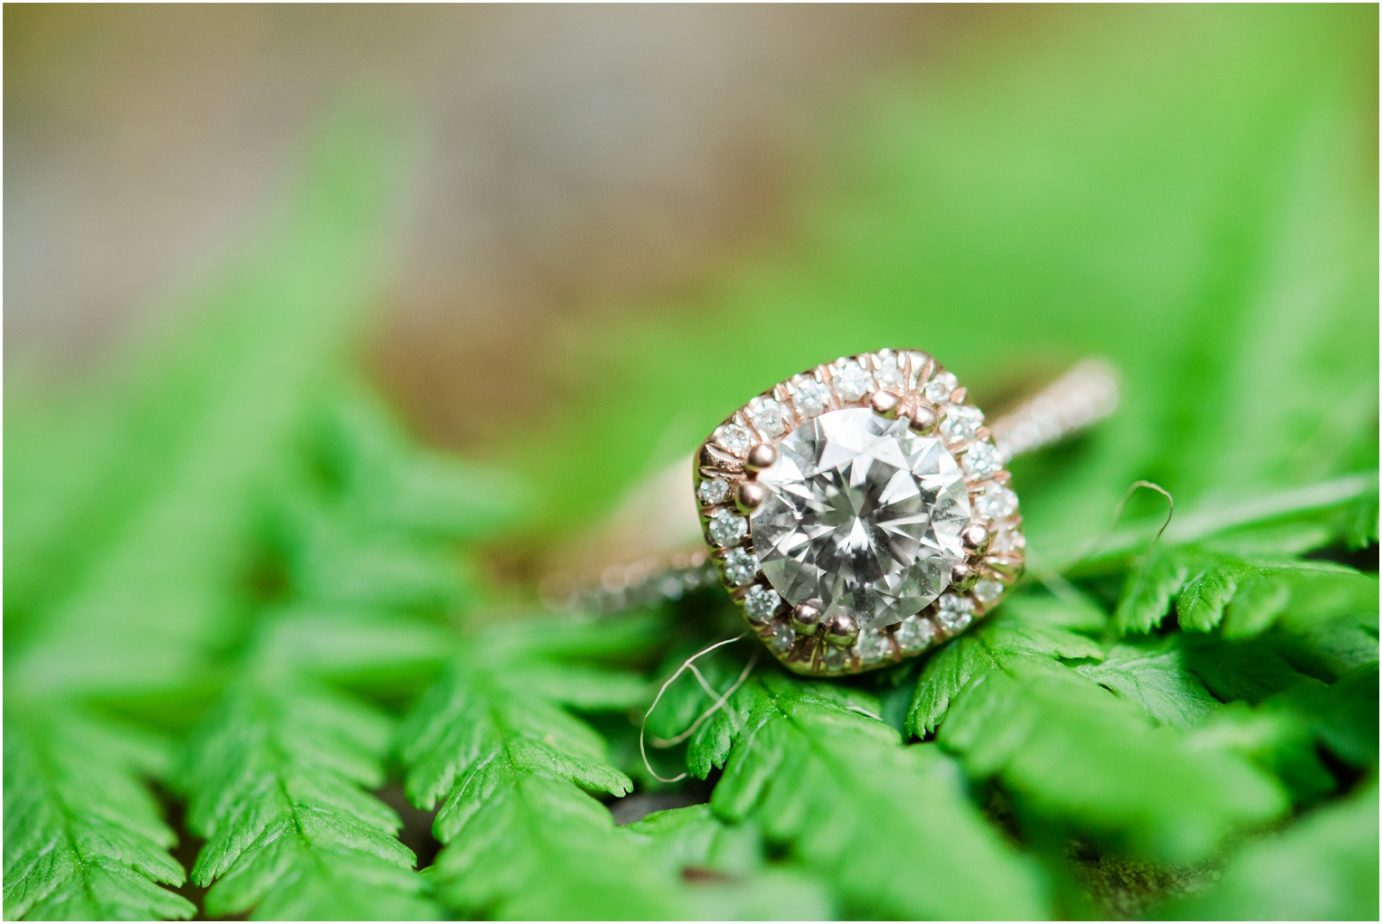 Boulder Cave Engagement Session Naches WA Rose gold diamond engagement ring